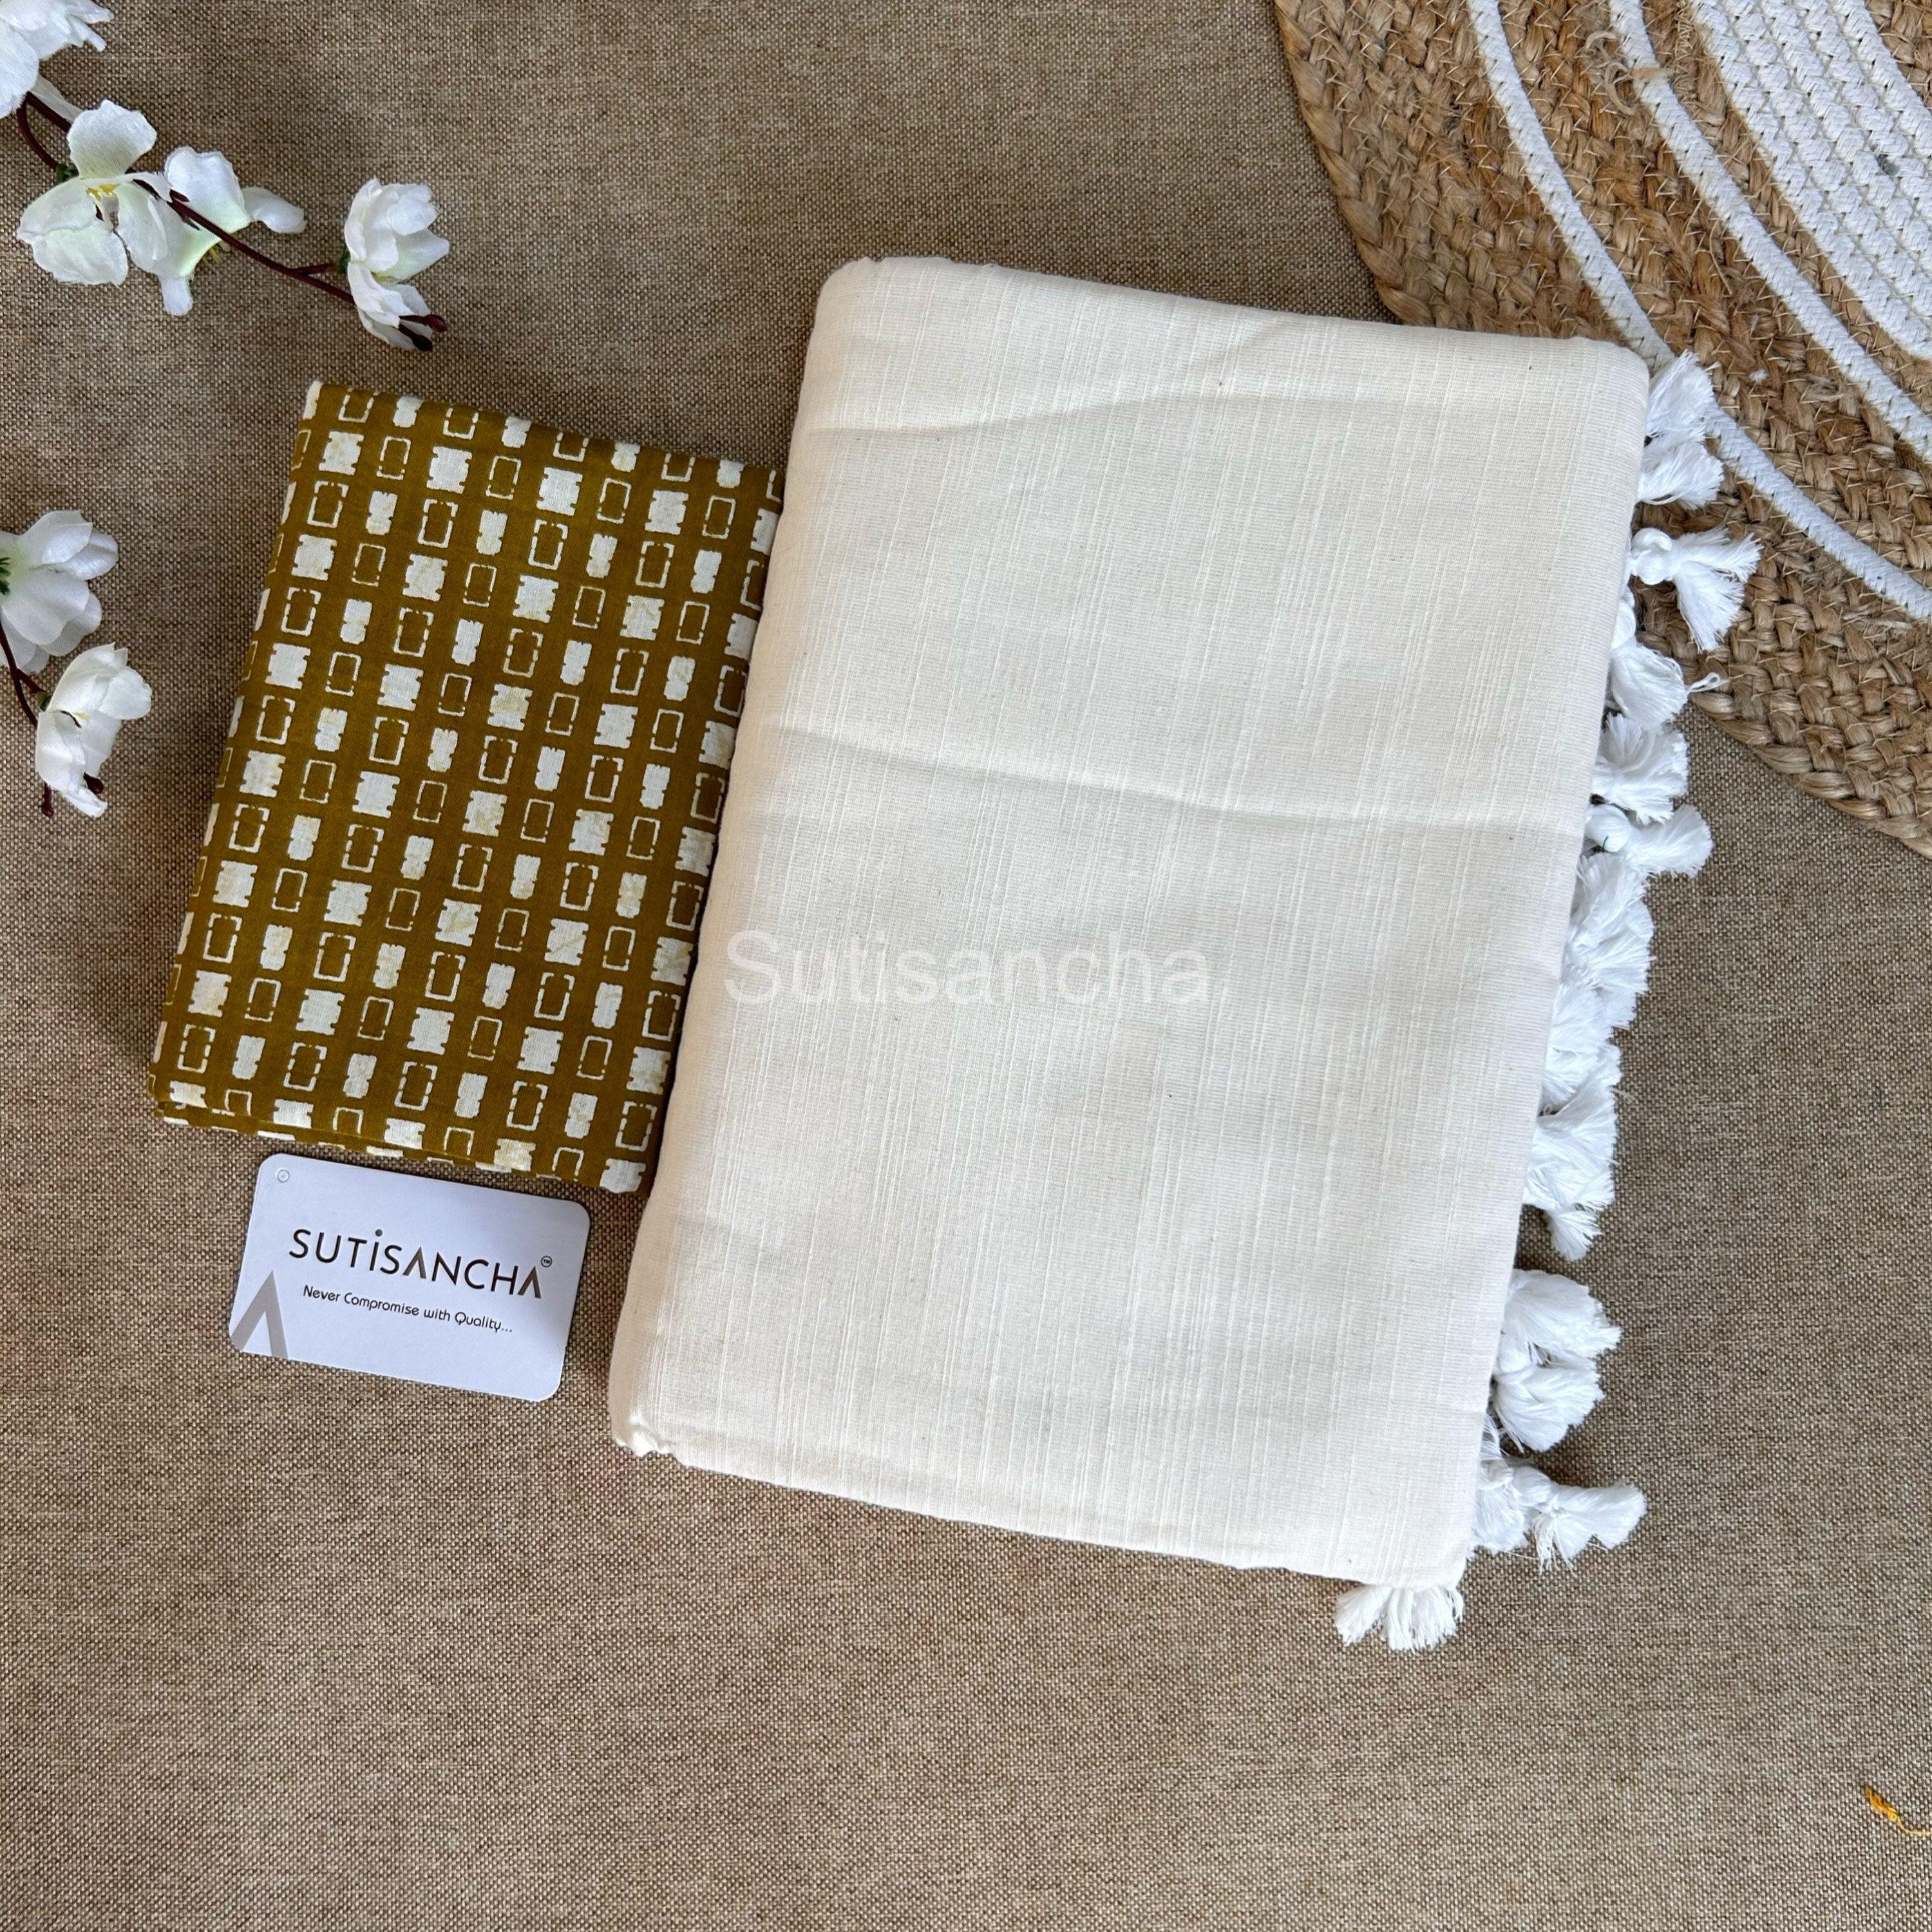 Sutisancha Offwhite Khadi Saree & Cotton Design Blouse - Suti Sancha